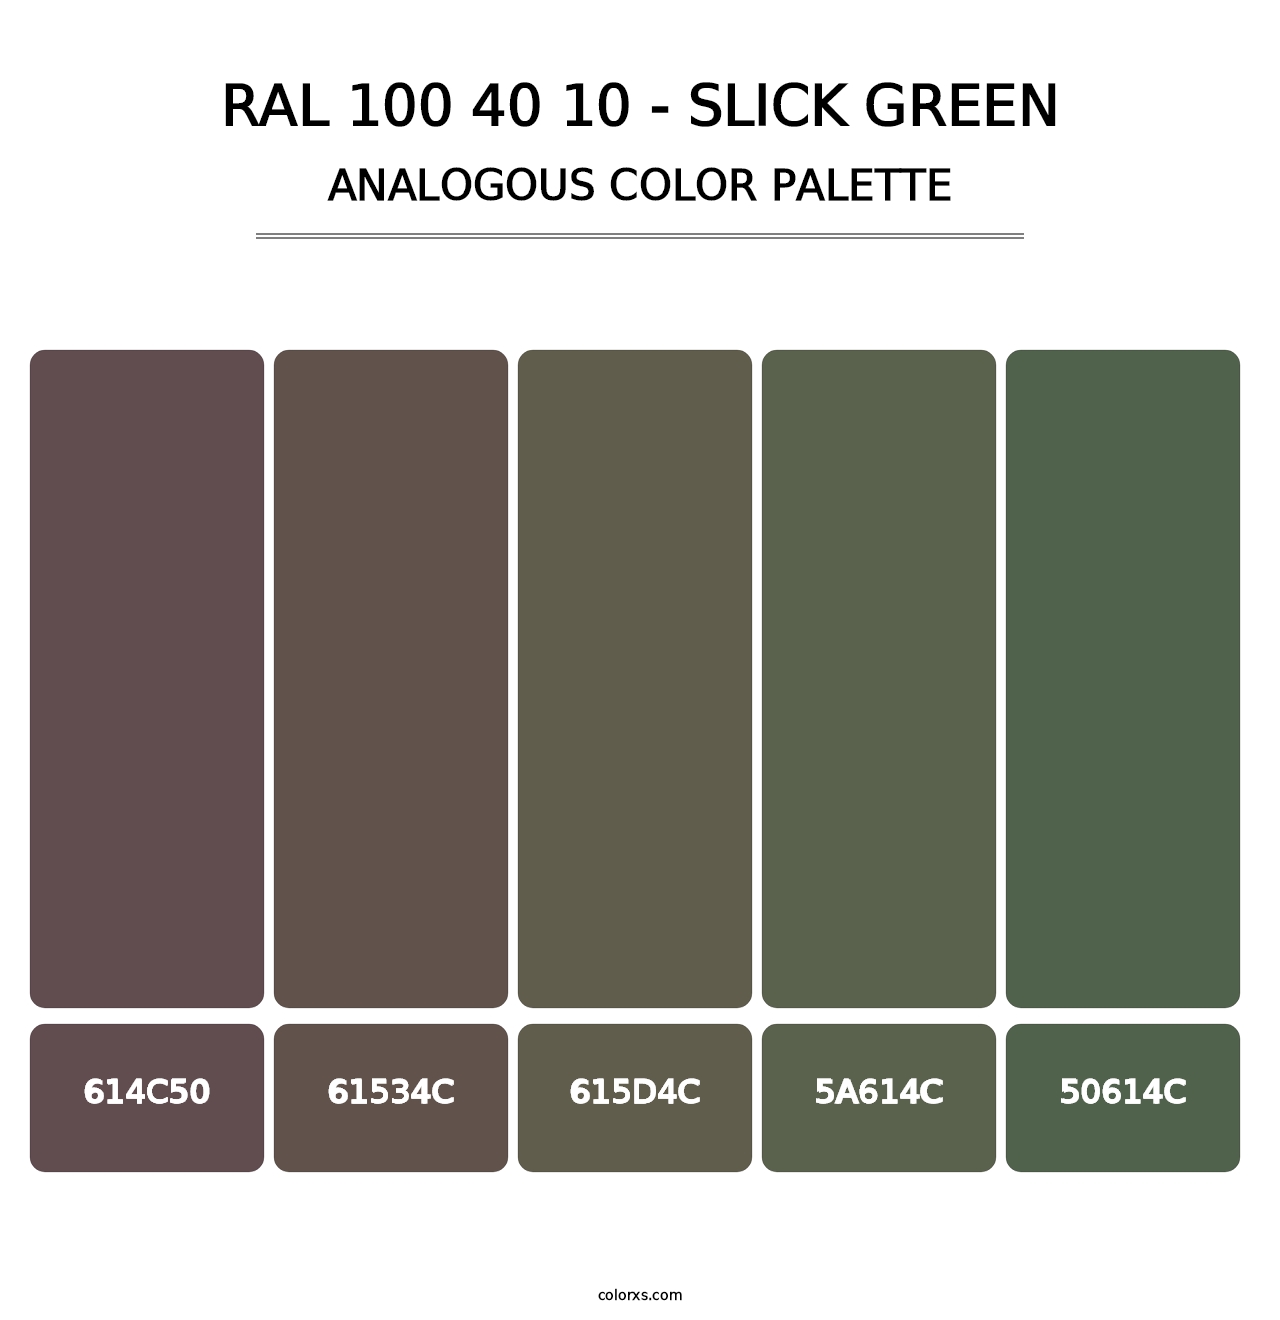 RAL 100 40 10 - Slick Green - Analogous Color Palette